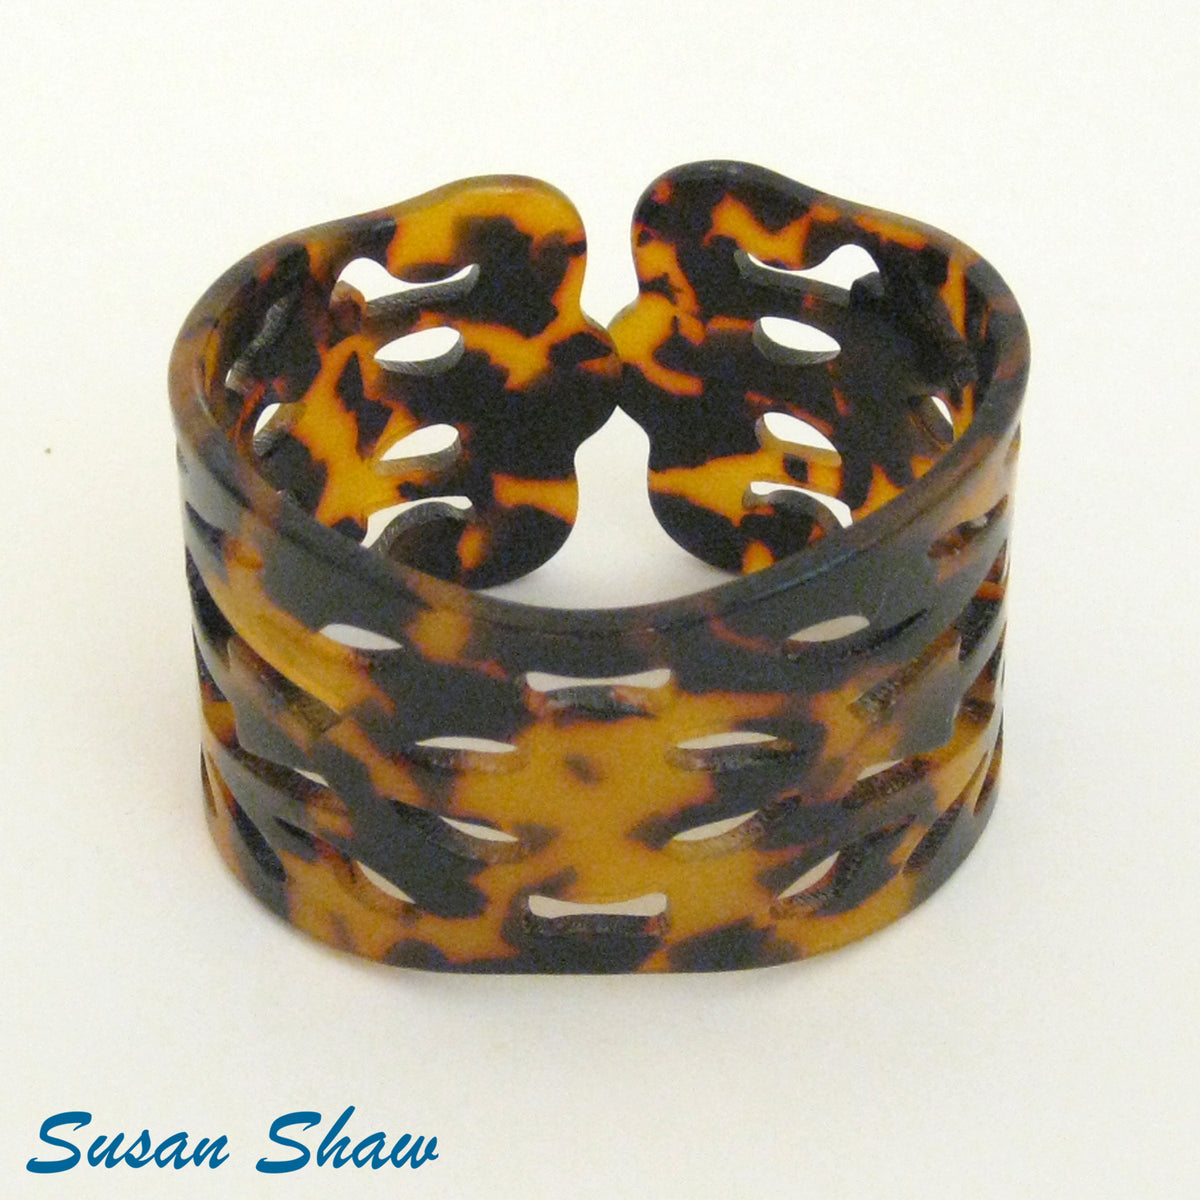 Susan Shaw Bracelet: Faux Tortoise Filigree Cuff